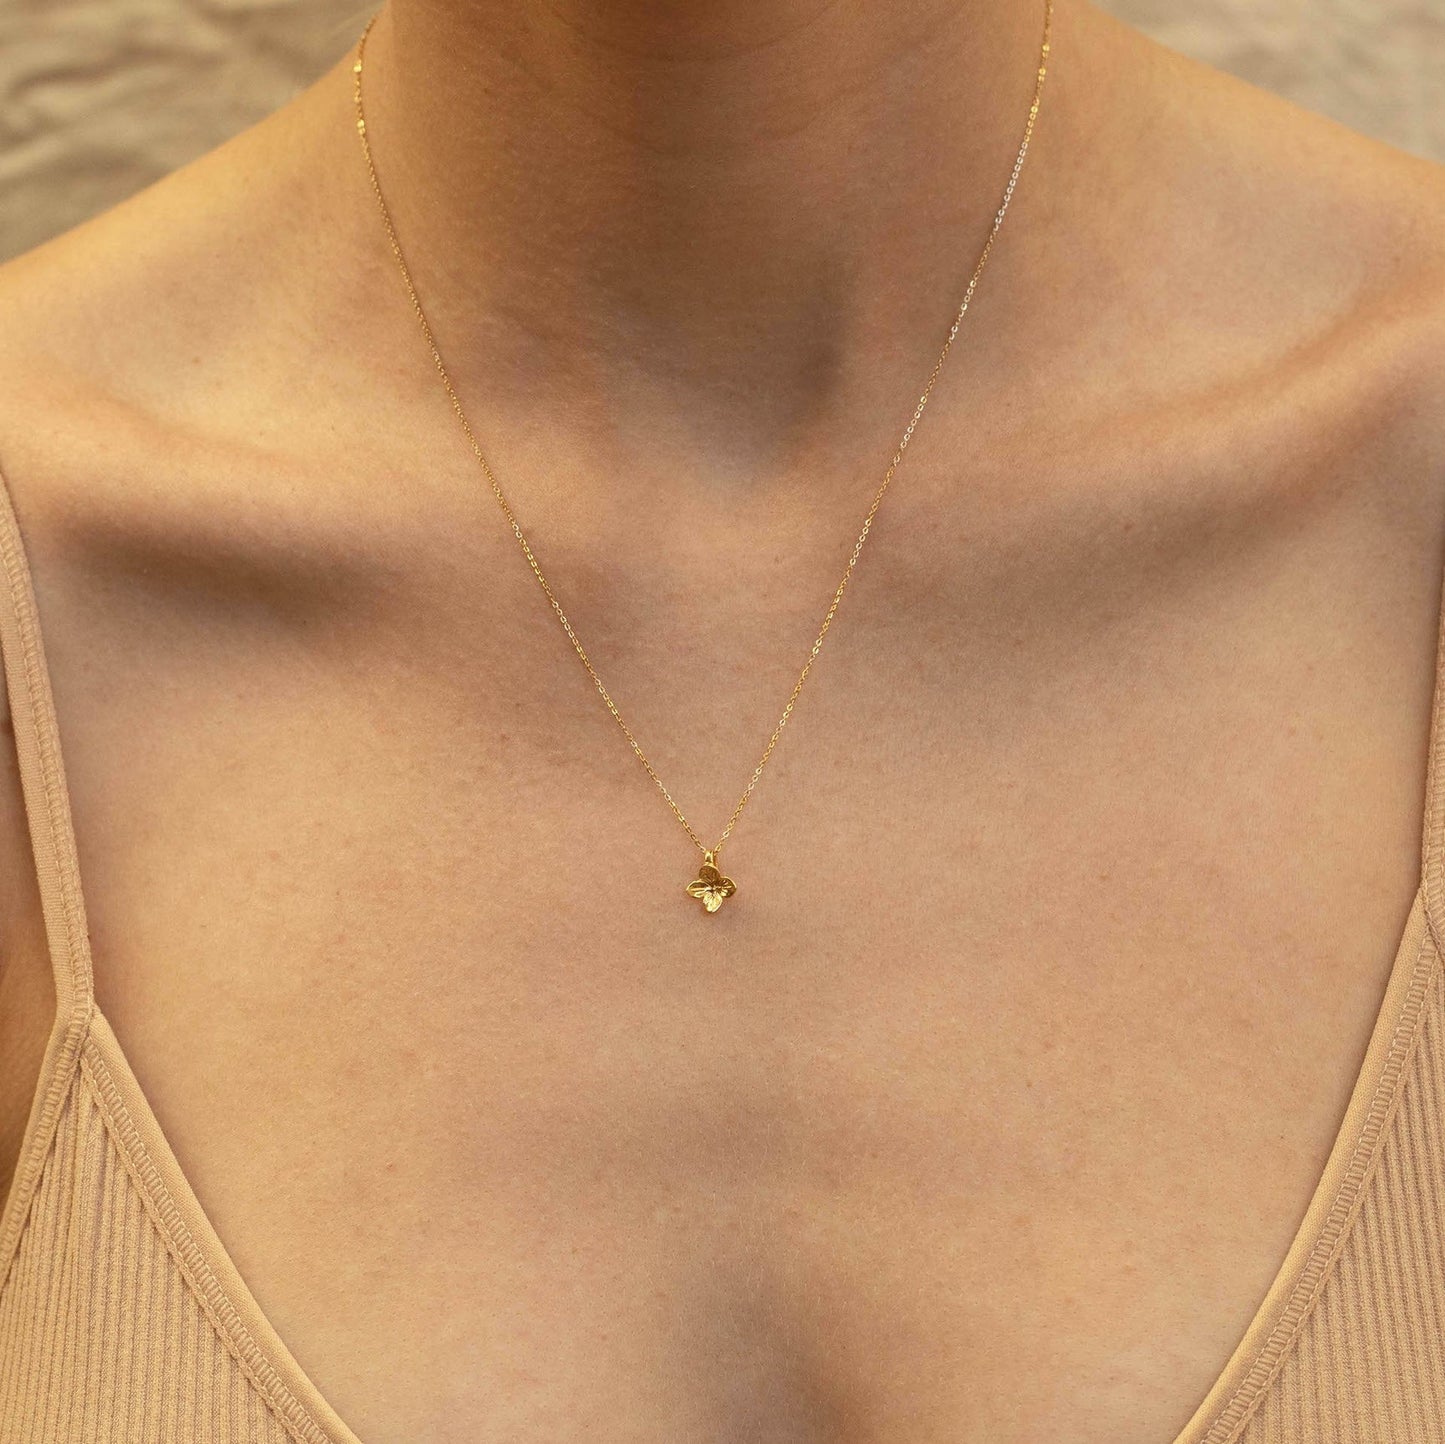 Linda Tahija - Hydrangea Necklace - Gold Plated